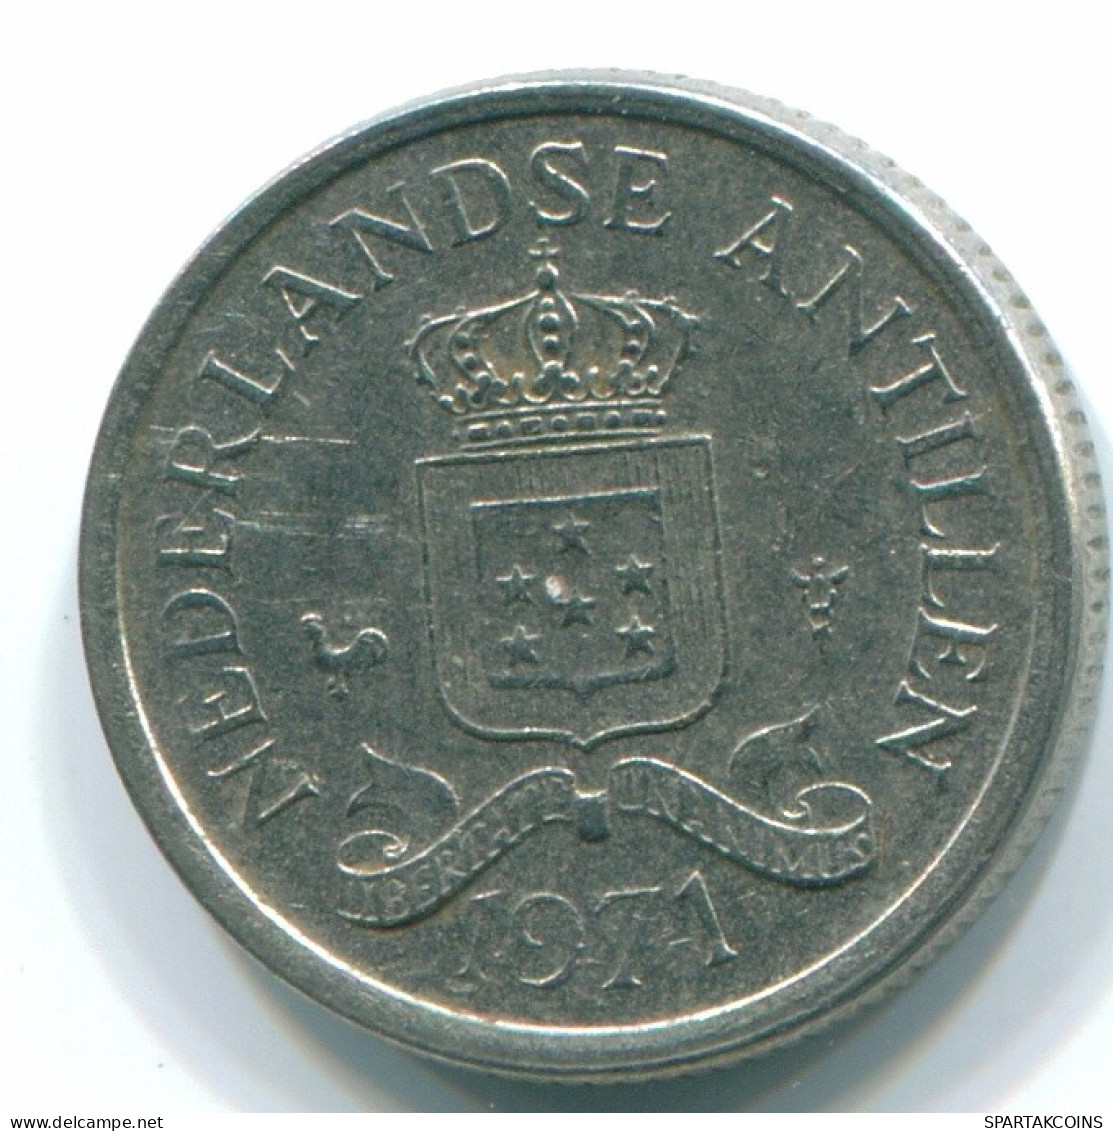 10 CENTS 1971 NETHERLANDS ANTILLES Nickel Colonial Coin #S13480.U.A - Antilles Néerlandaises